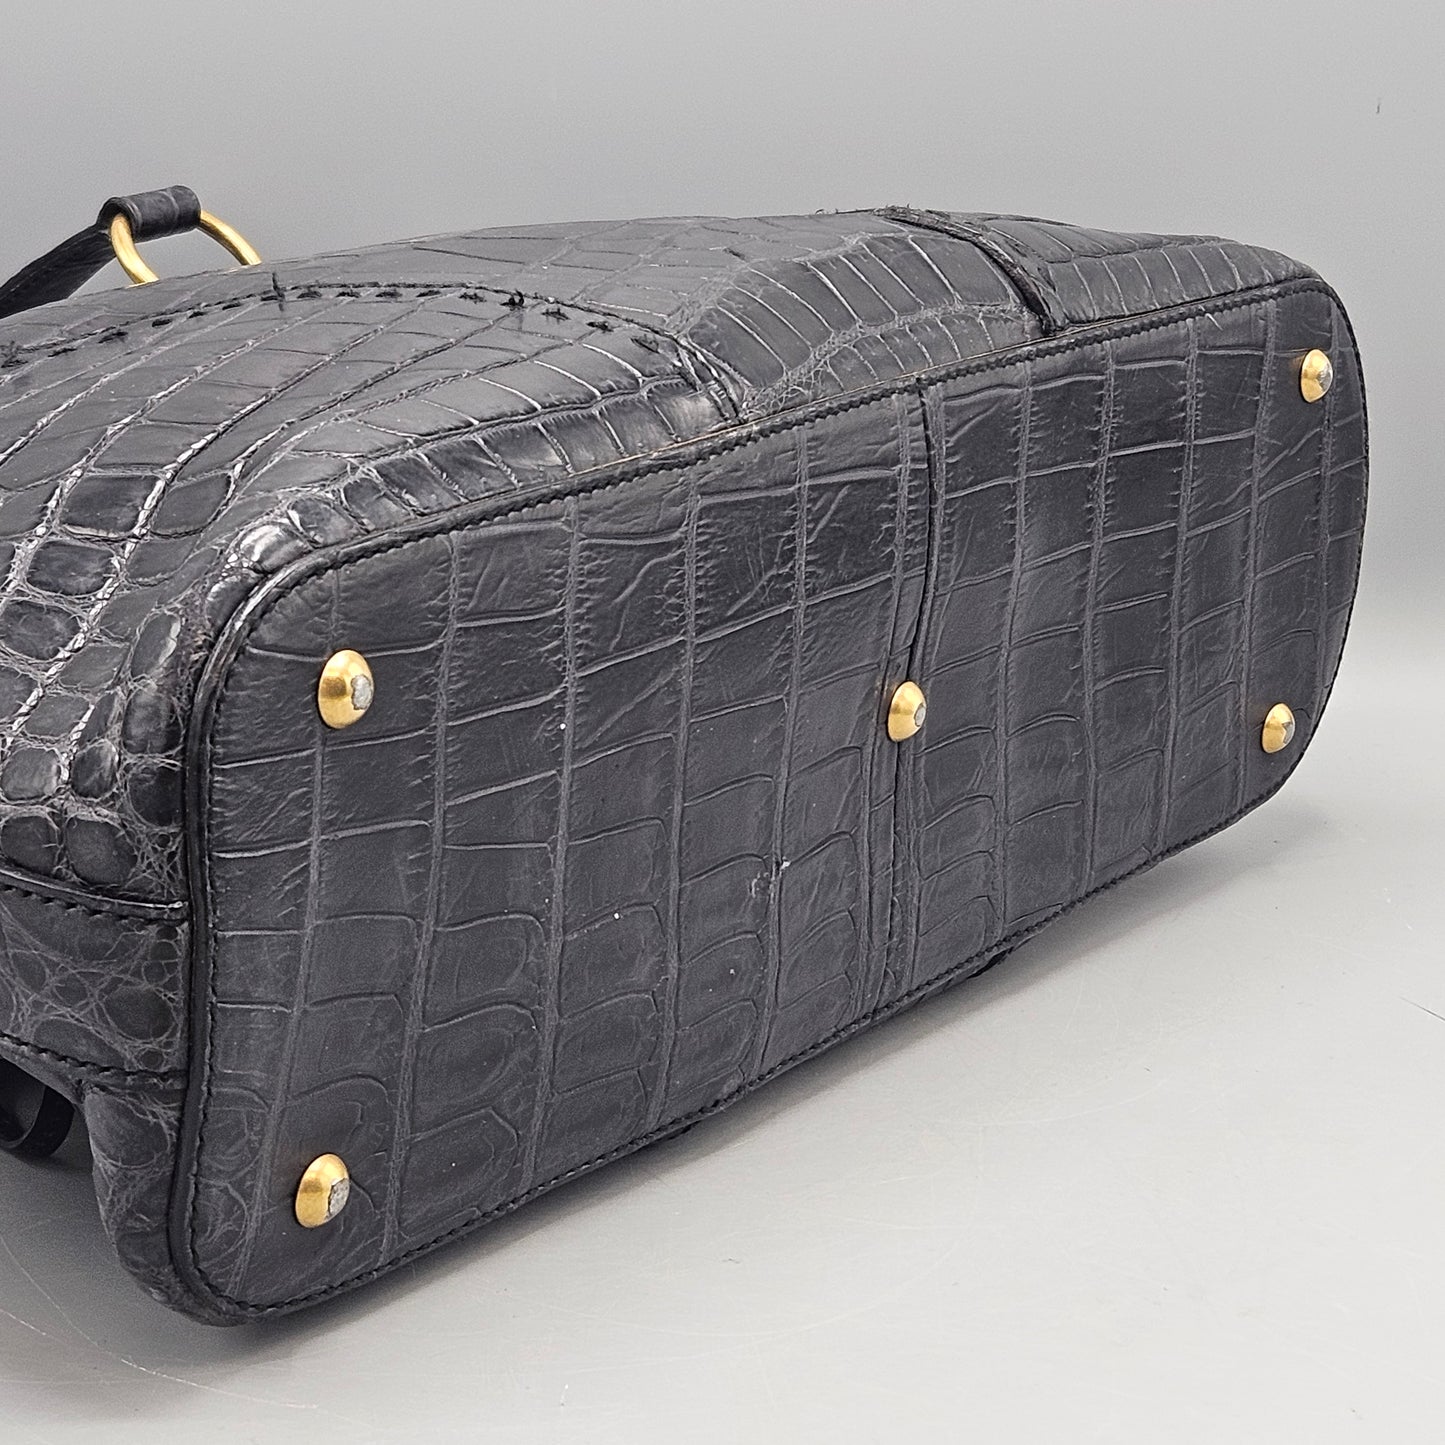 Yves Saint Laurent Crocodile Muse Bag Shoulder Tote Satchel